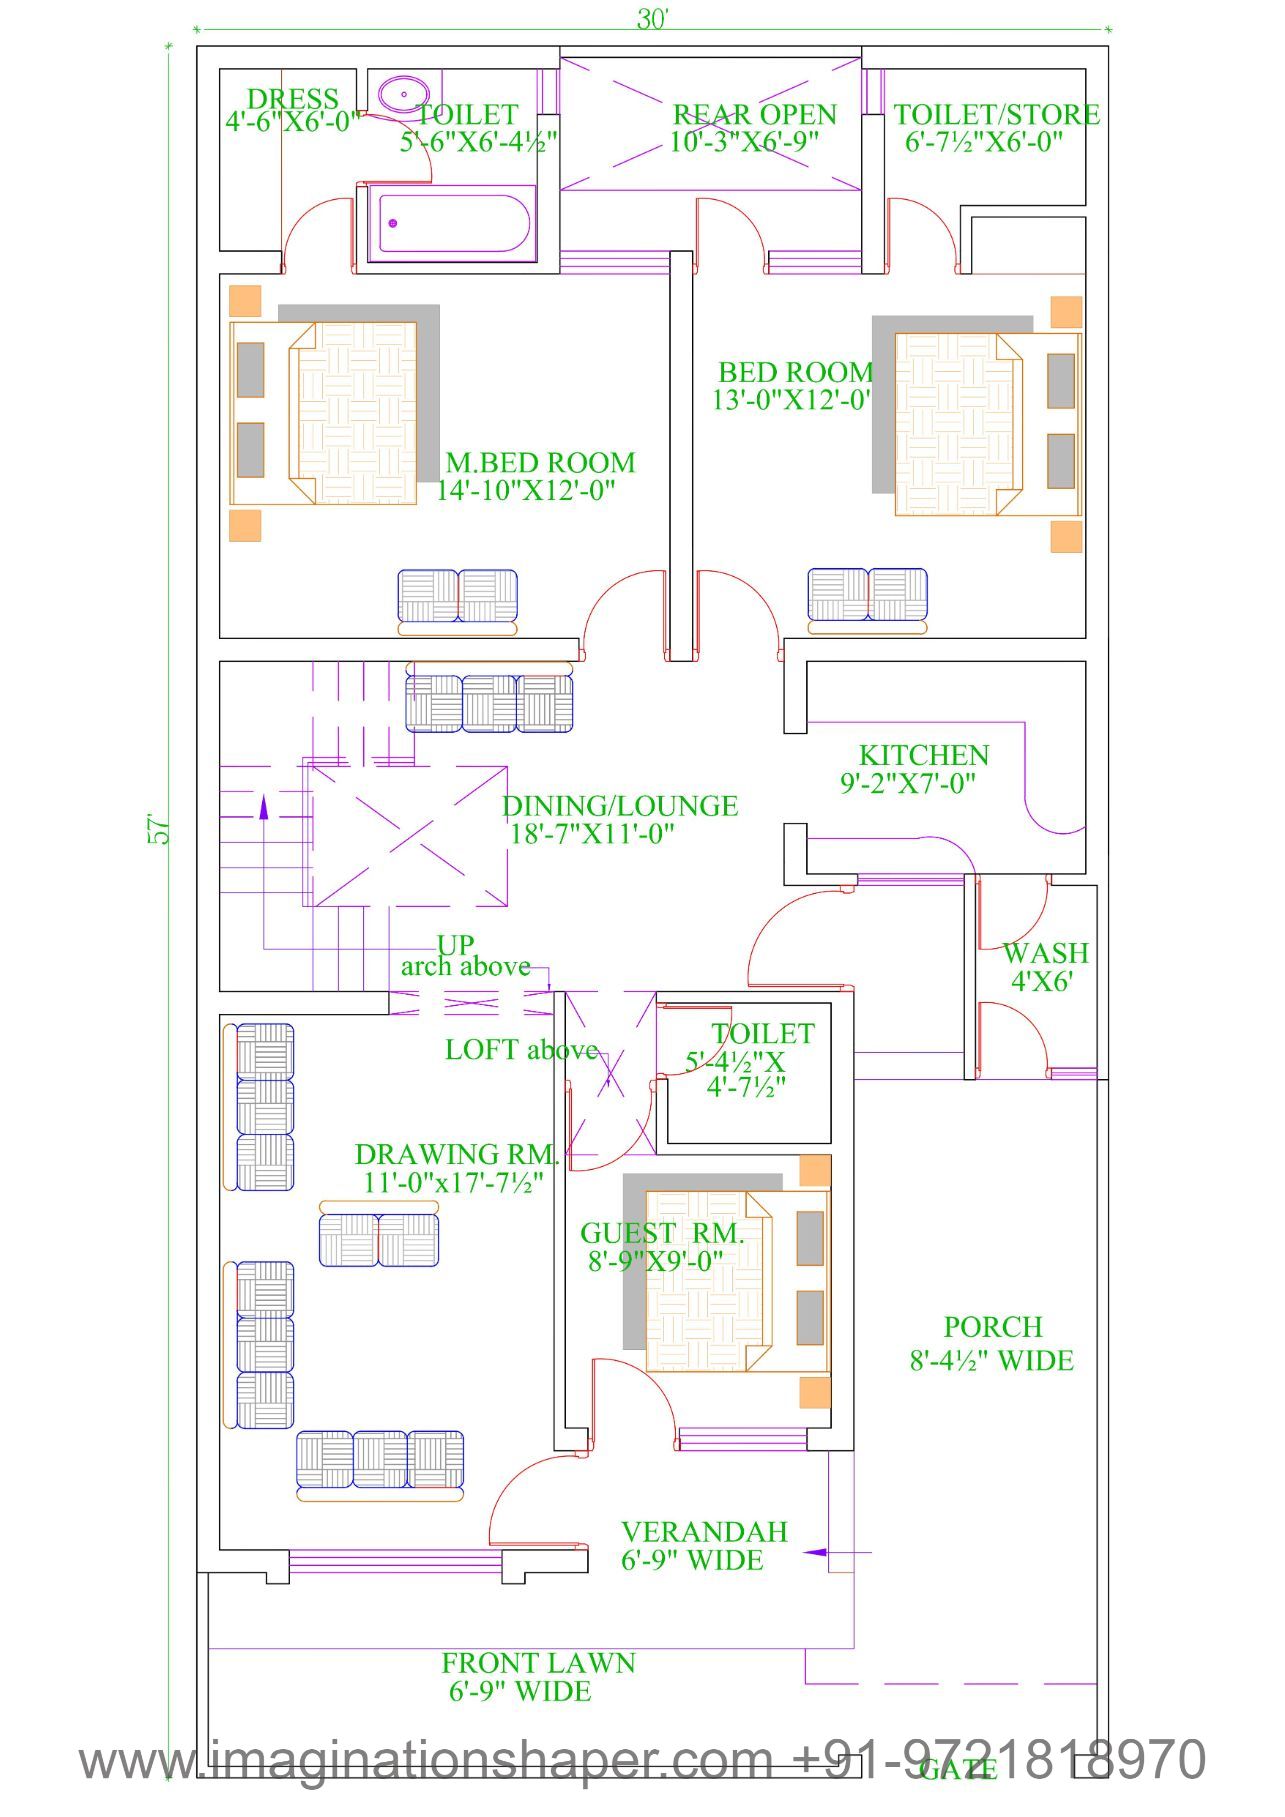 30x57 home plans